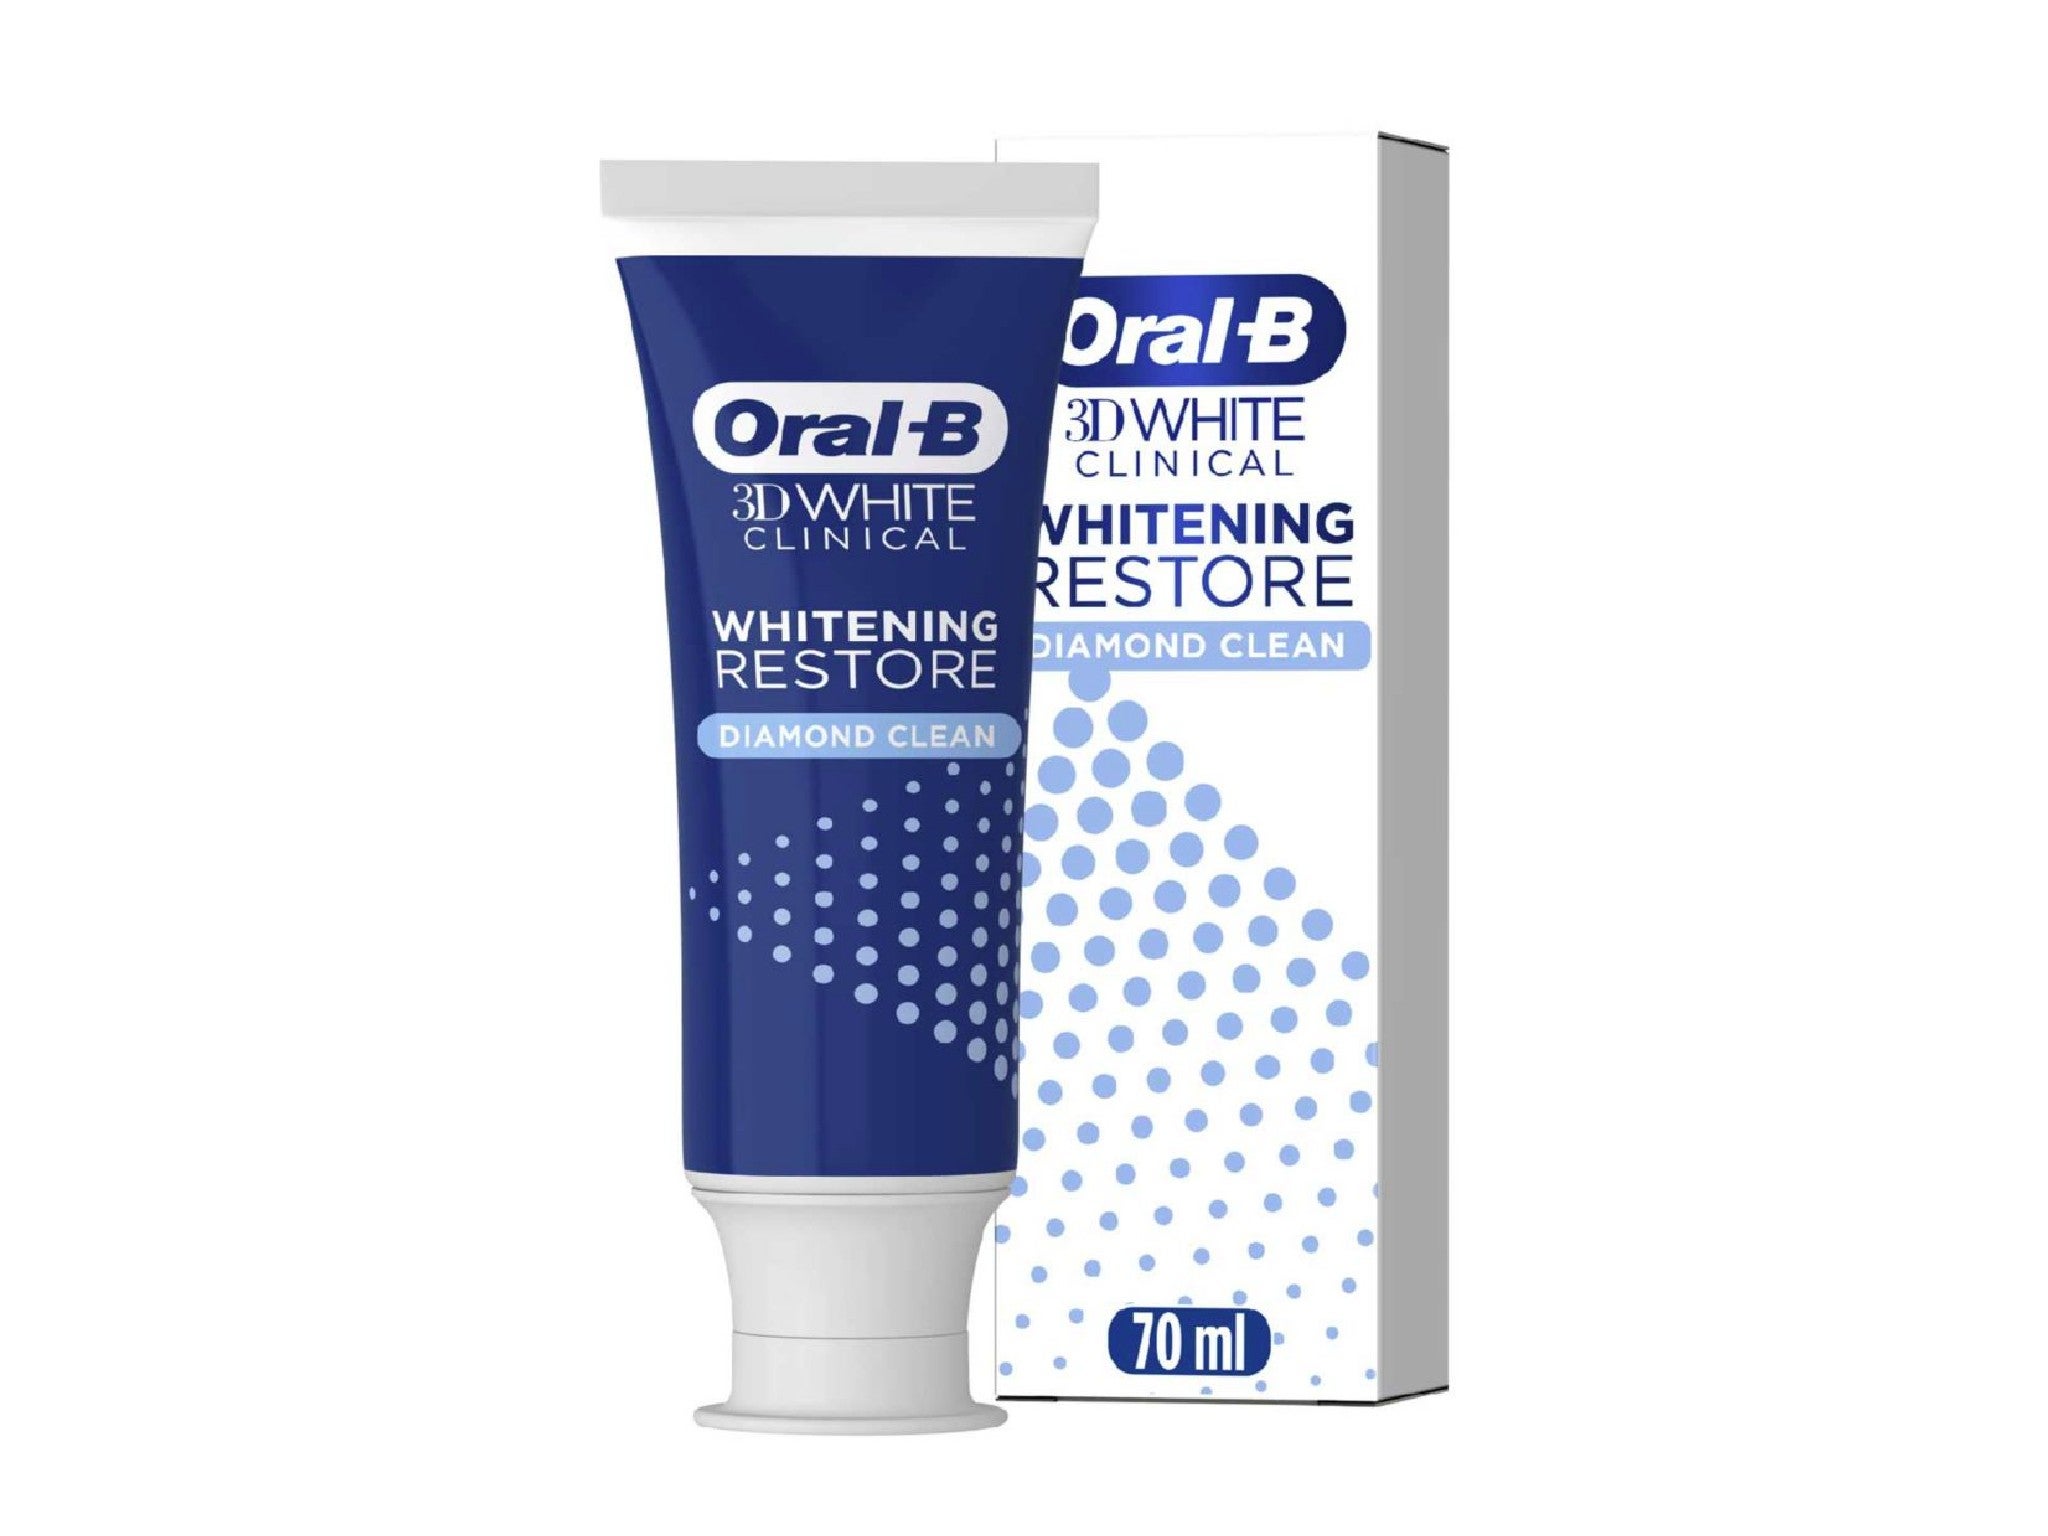 Oral-B 3DWhite clinical whitening restore diamond clean toothpaste indybest.jpg